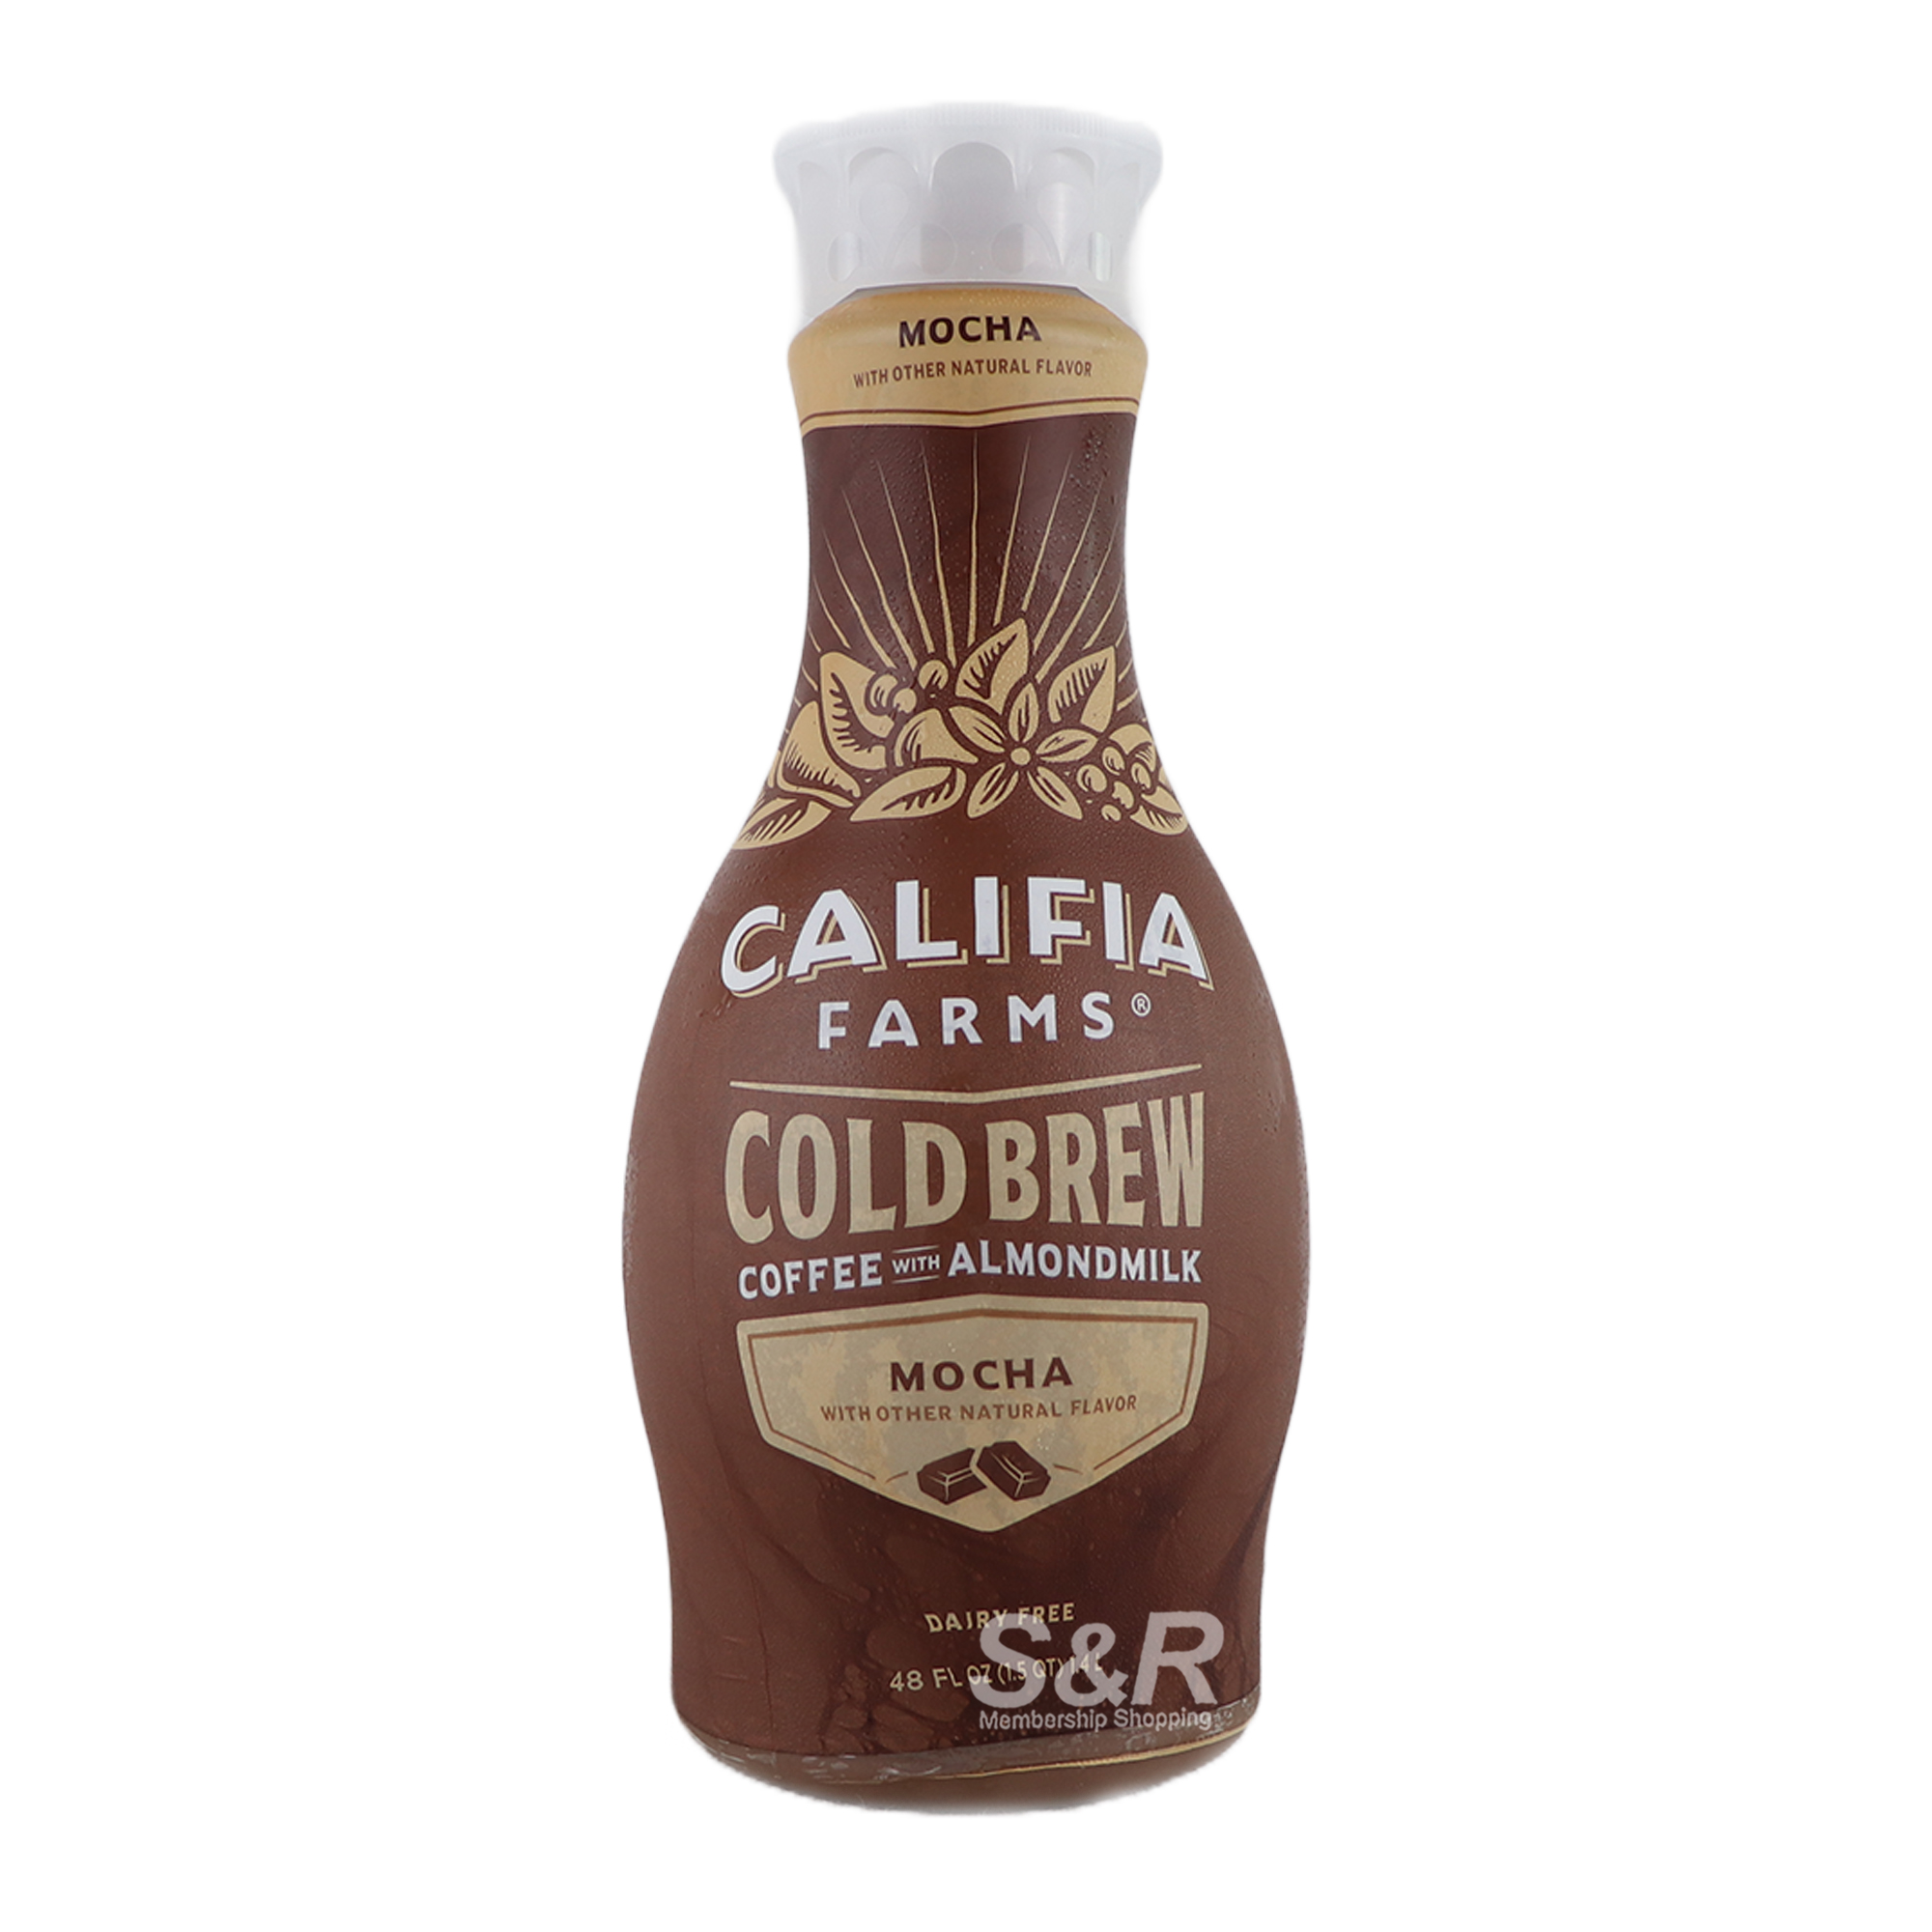 Califia Farms Cold Brew Coffee with Almond Milk Mocha 1.4L